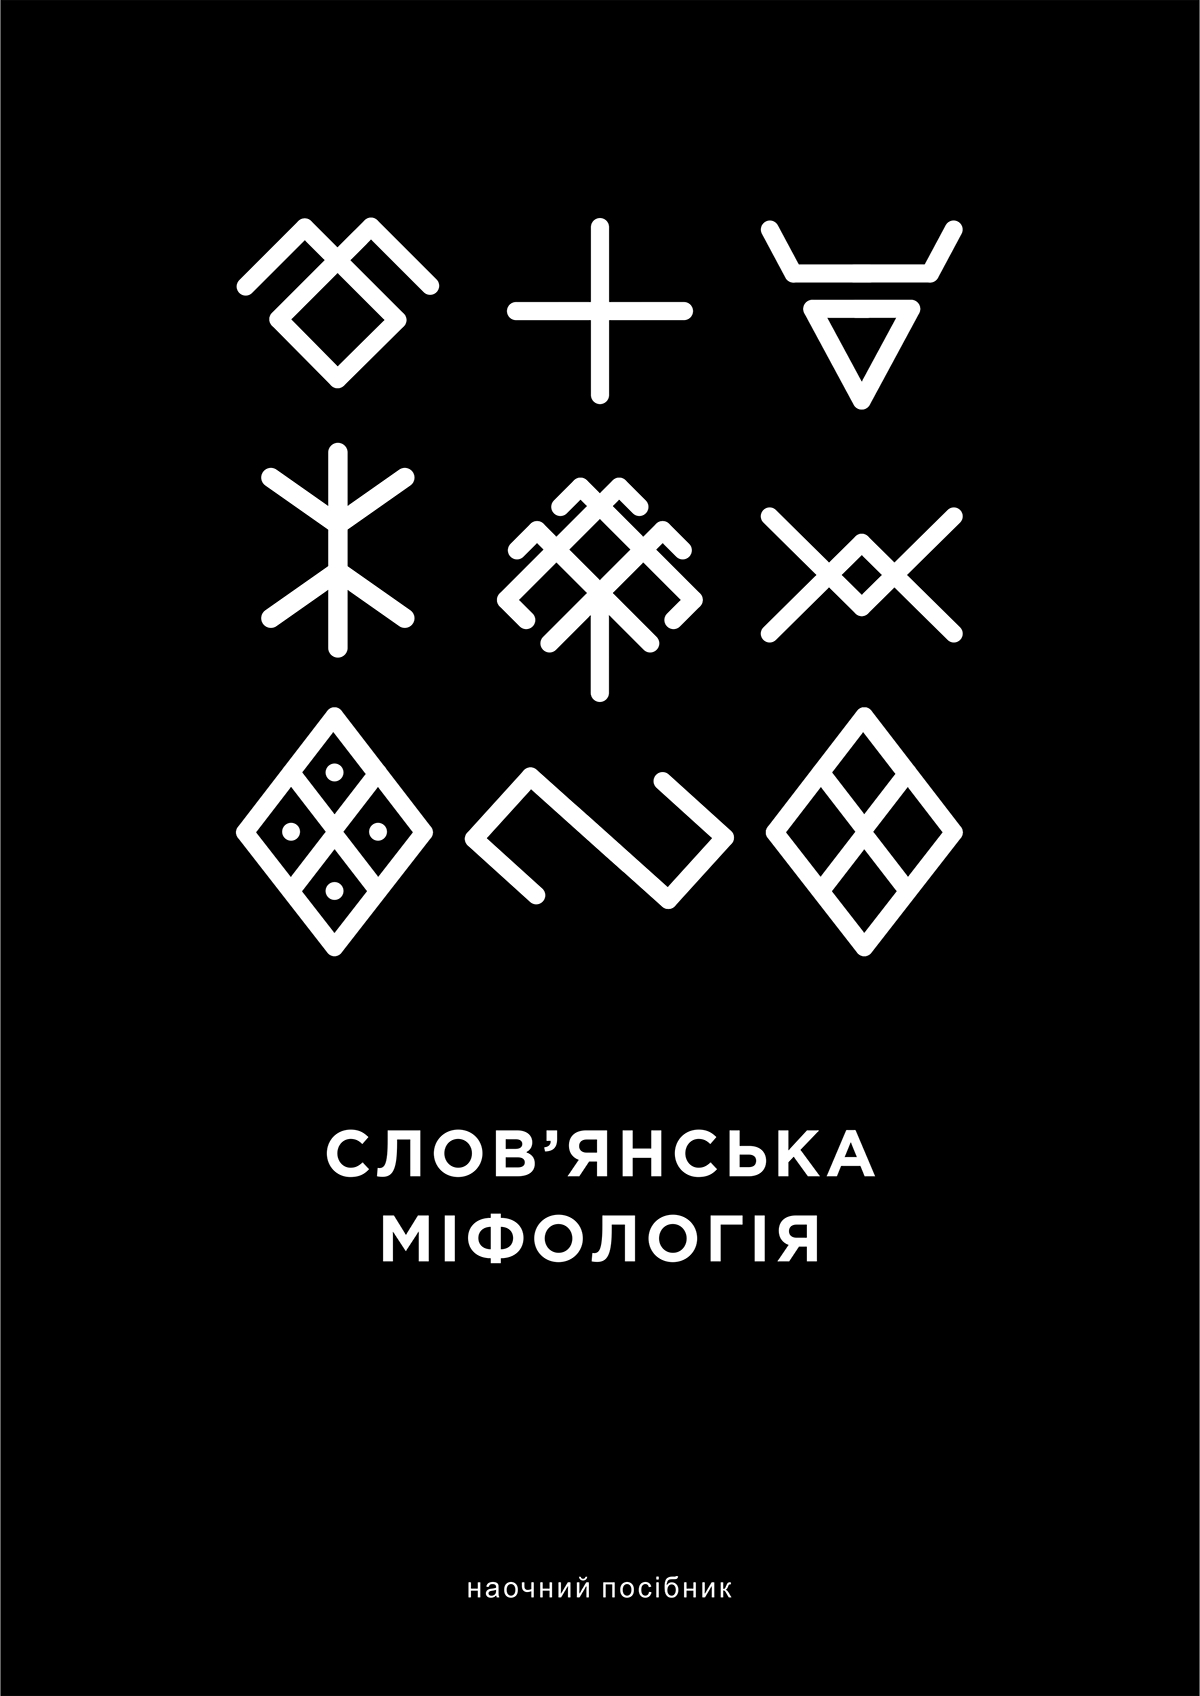 The design of the visual textbook Slavic Mythology иллюстрация знаки векторная графика